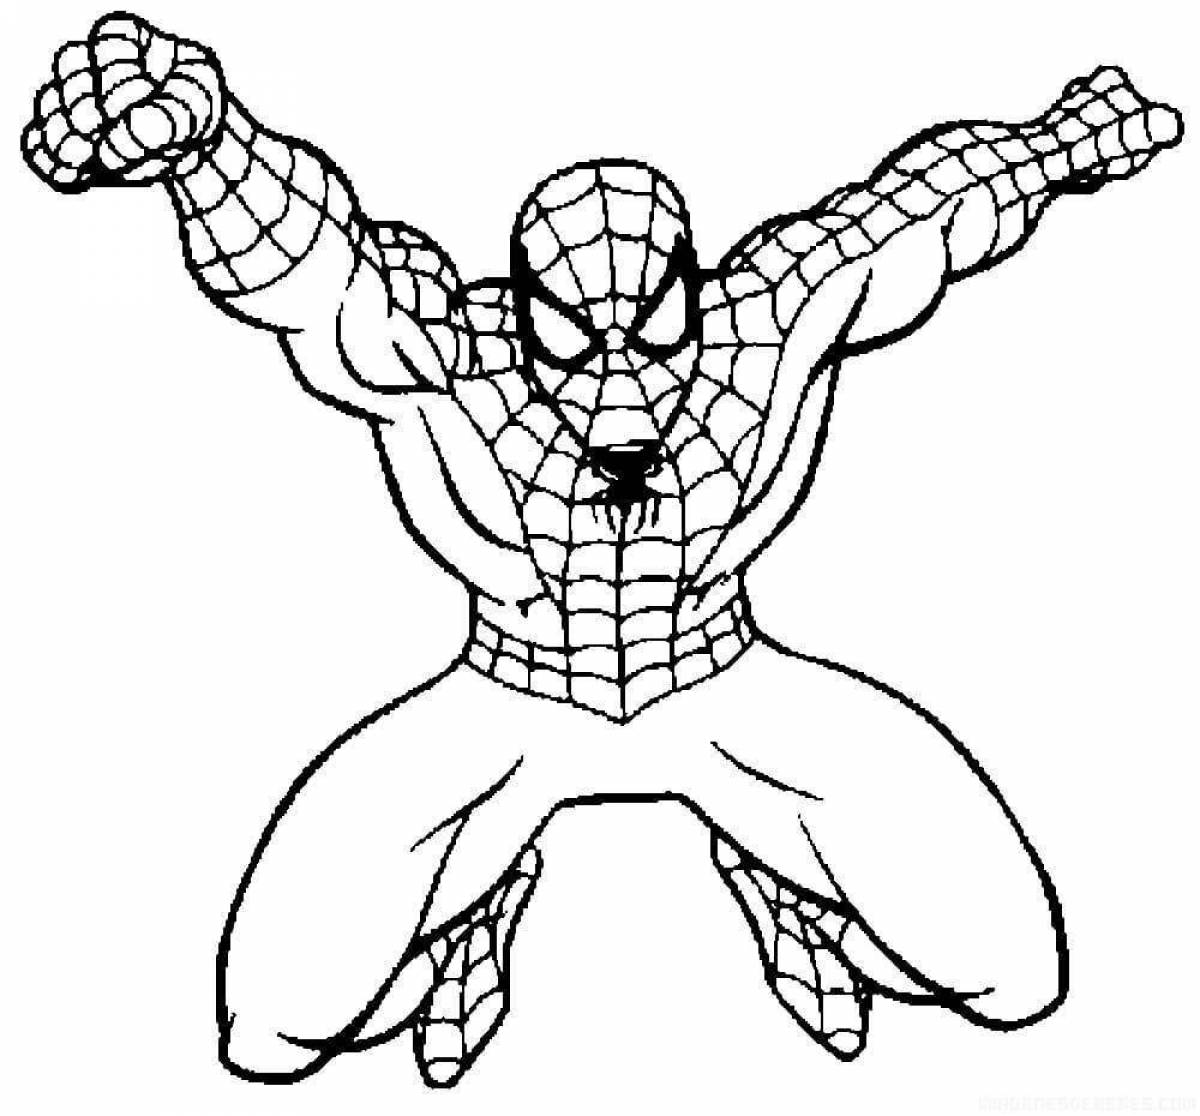 Royal spider-man coloring page